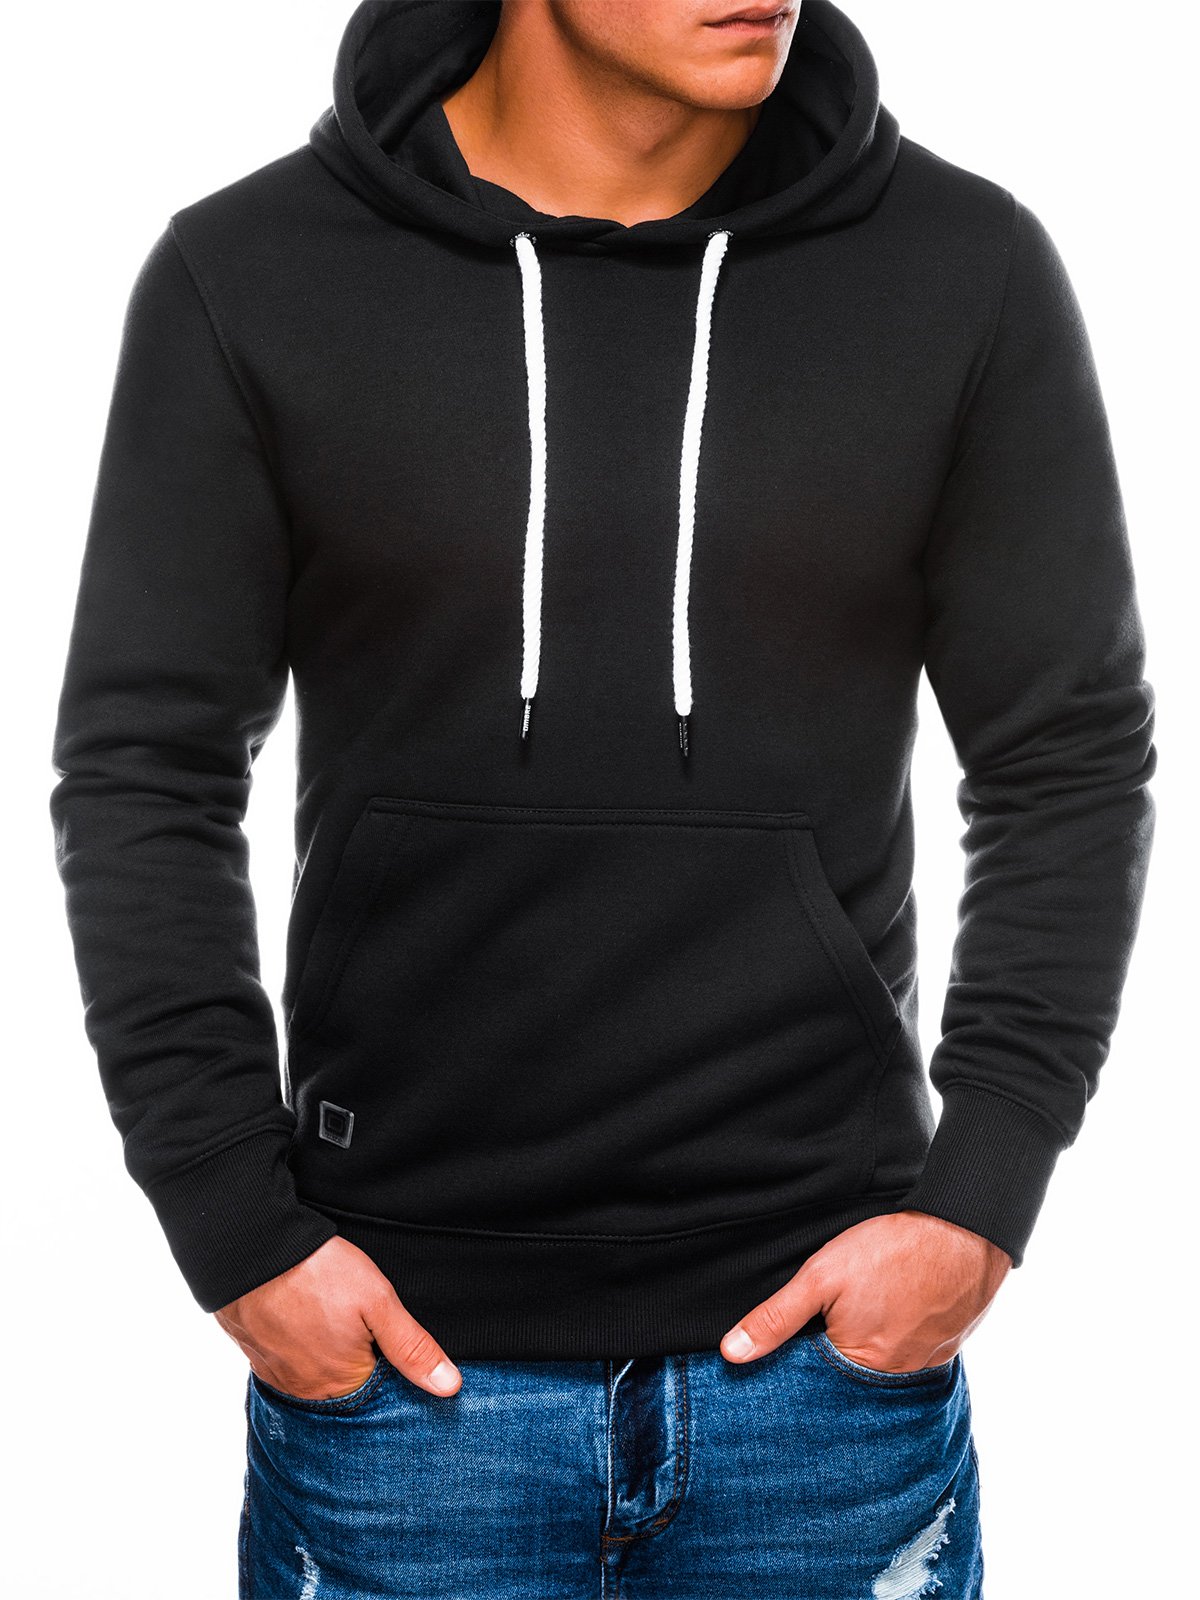 Men's hooded sweatshirt B979 - black | MODONE wholesale - Clothing For Men